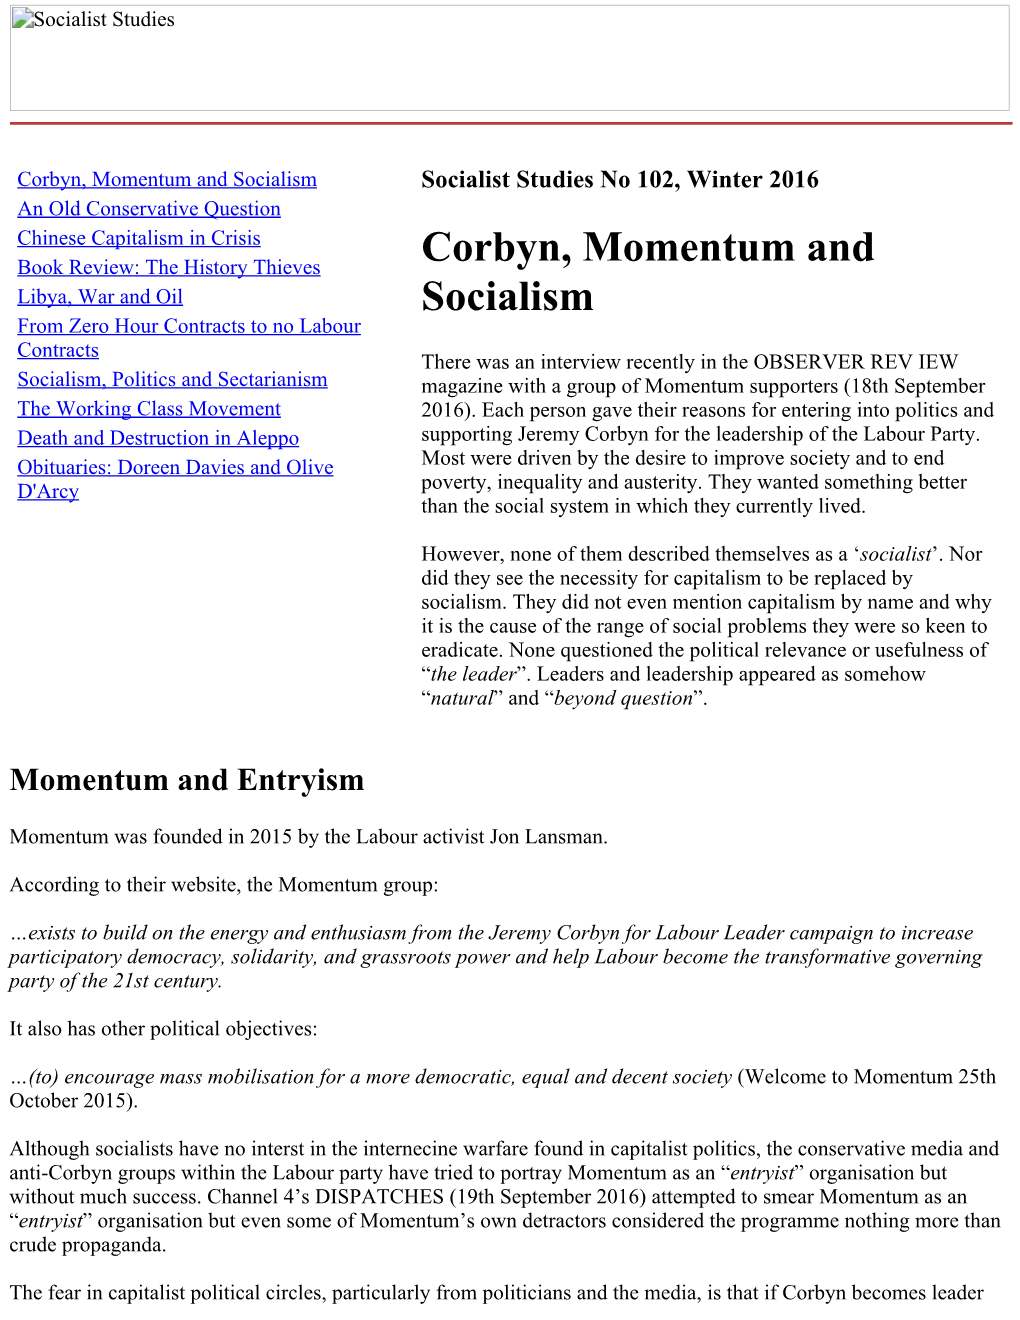 Corbyn, Momentum and Socialism